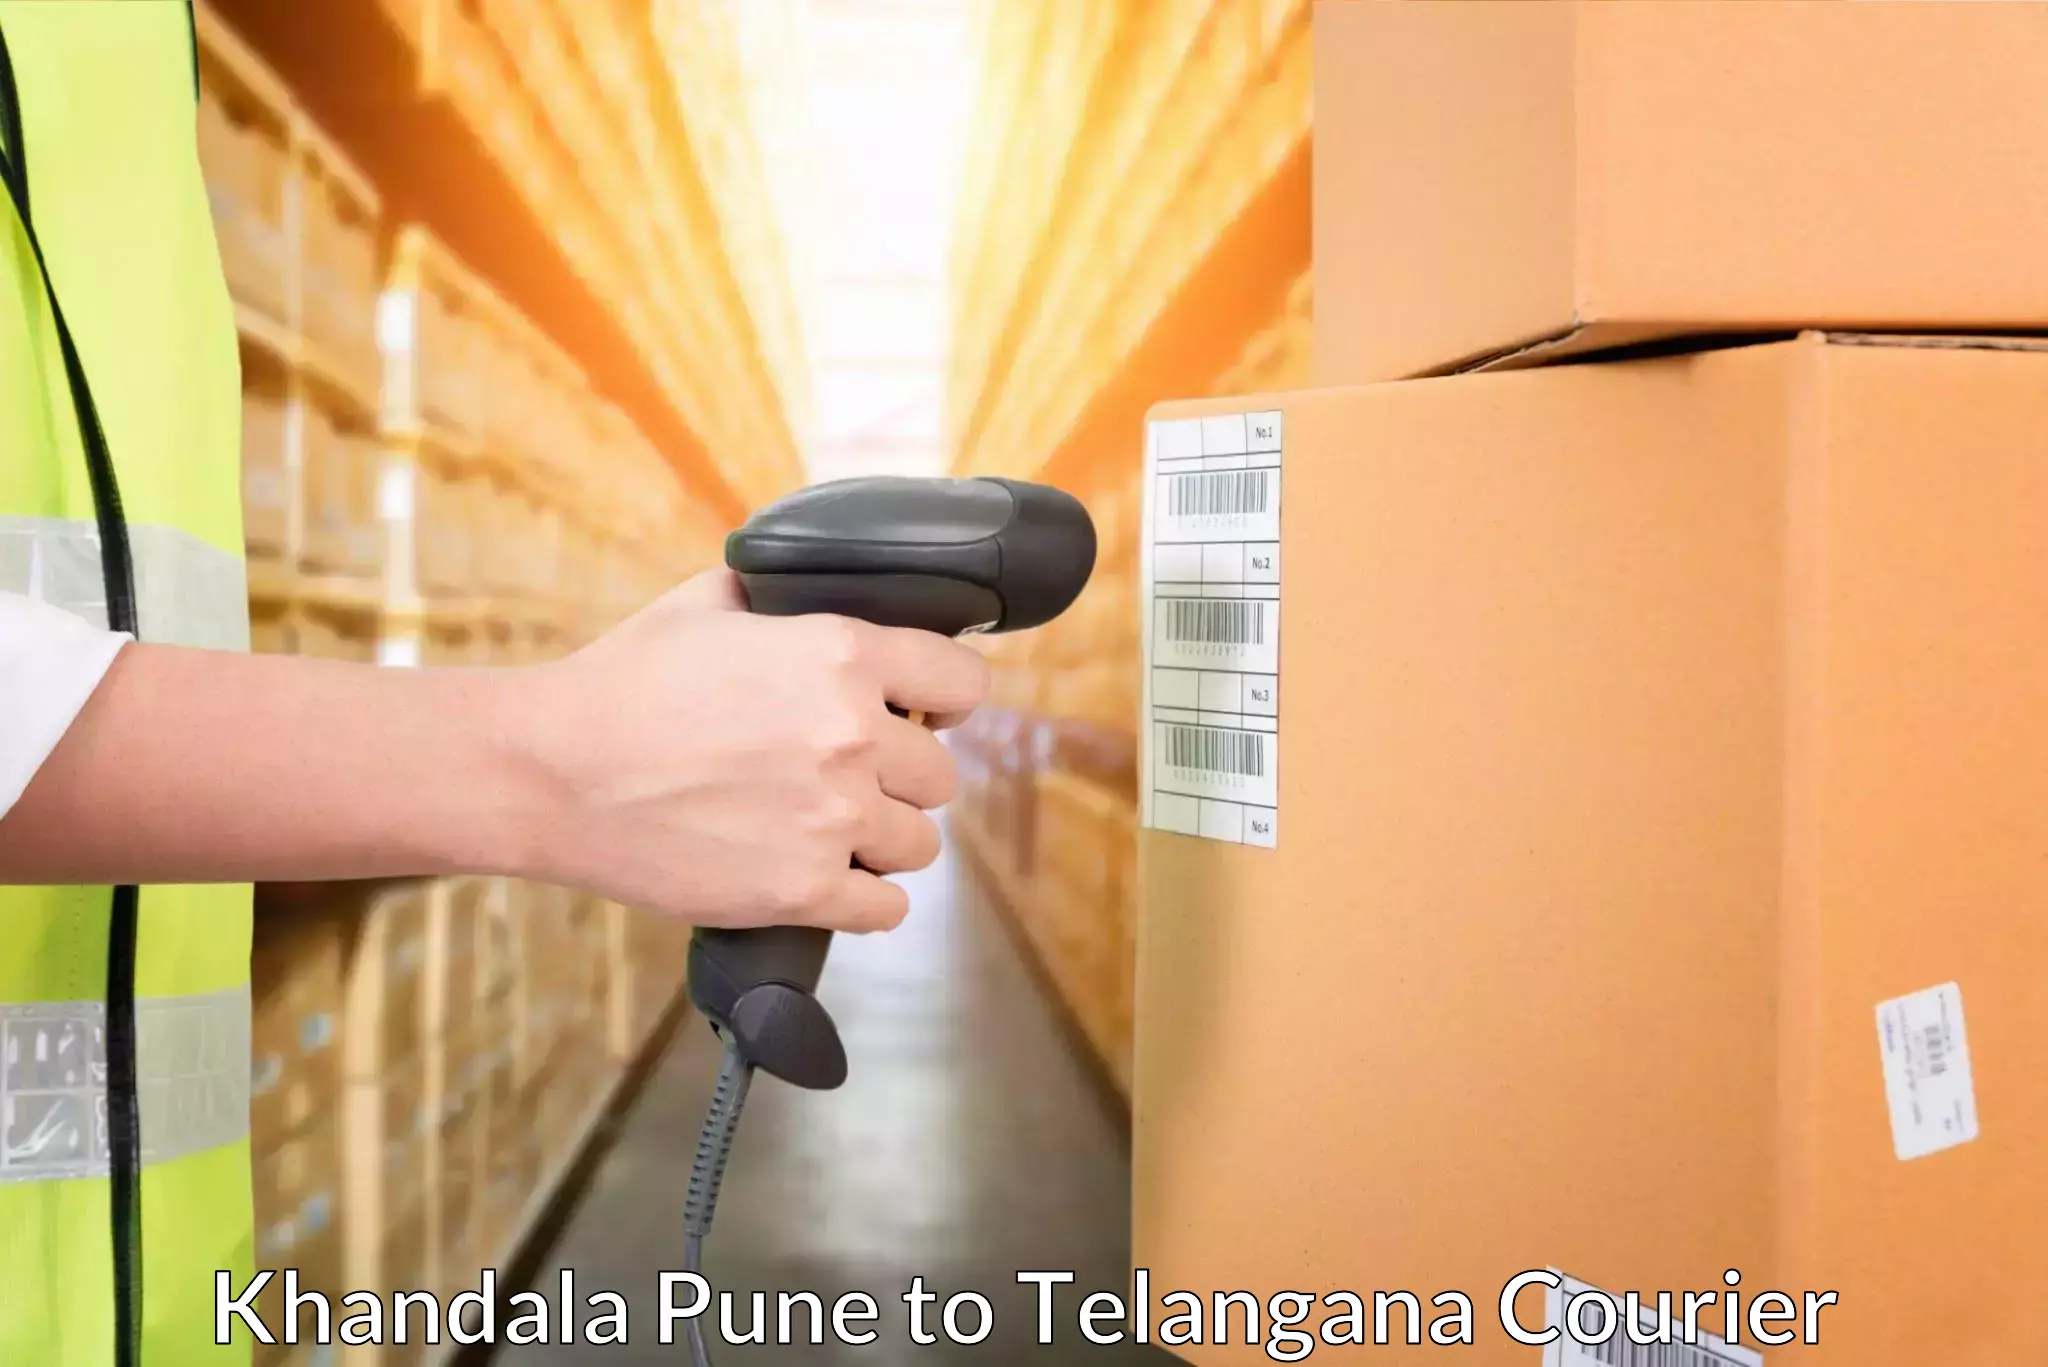 Express courier capabilities Khandala Pune to Kollapur